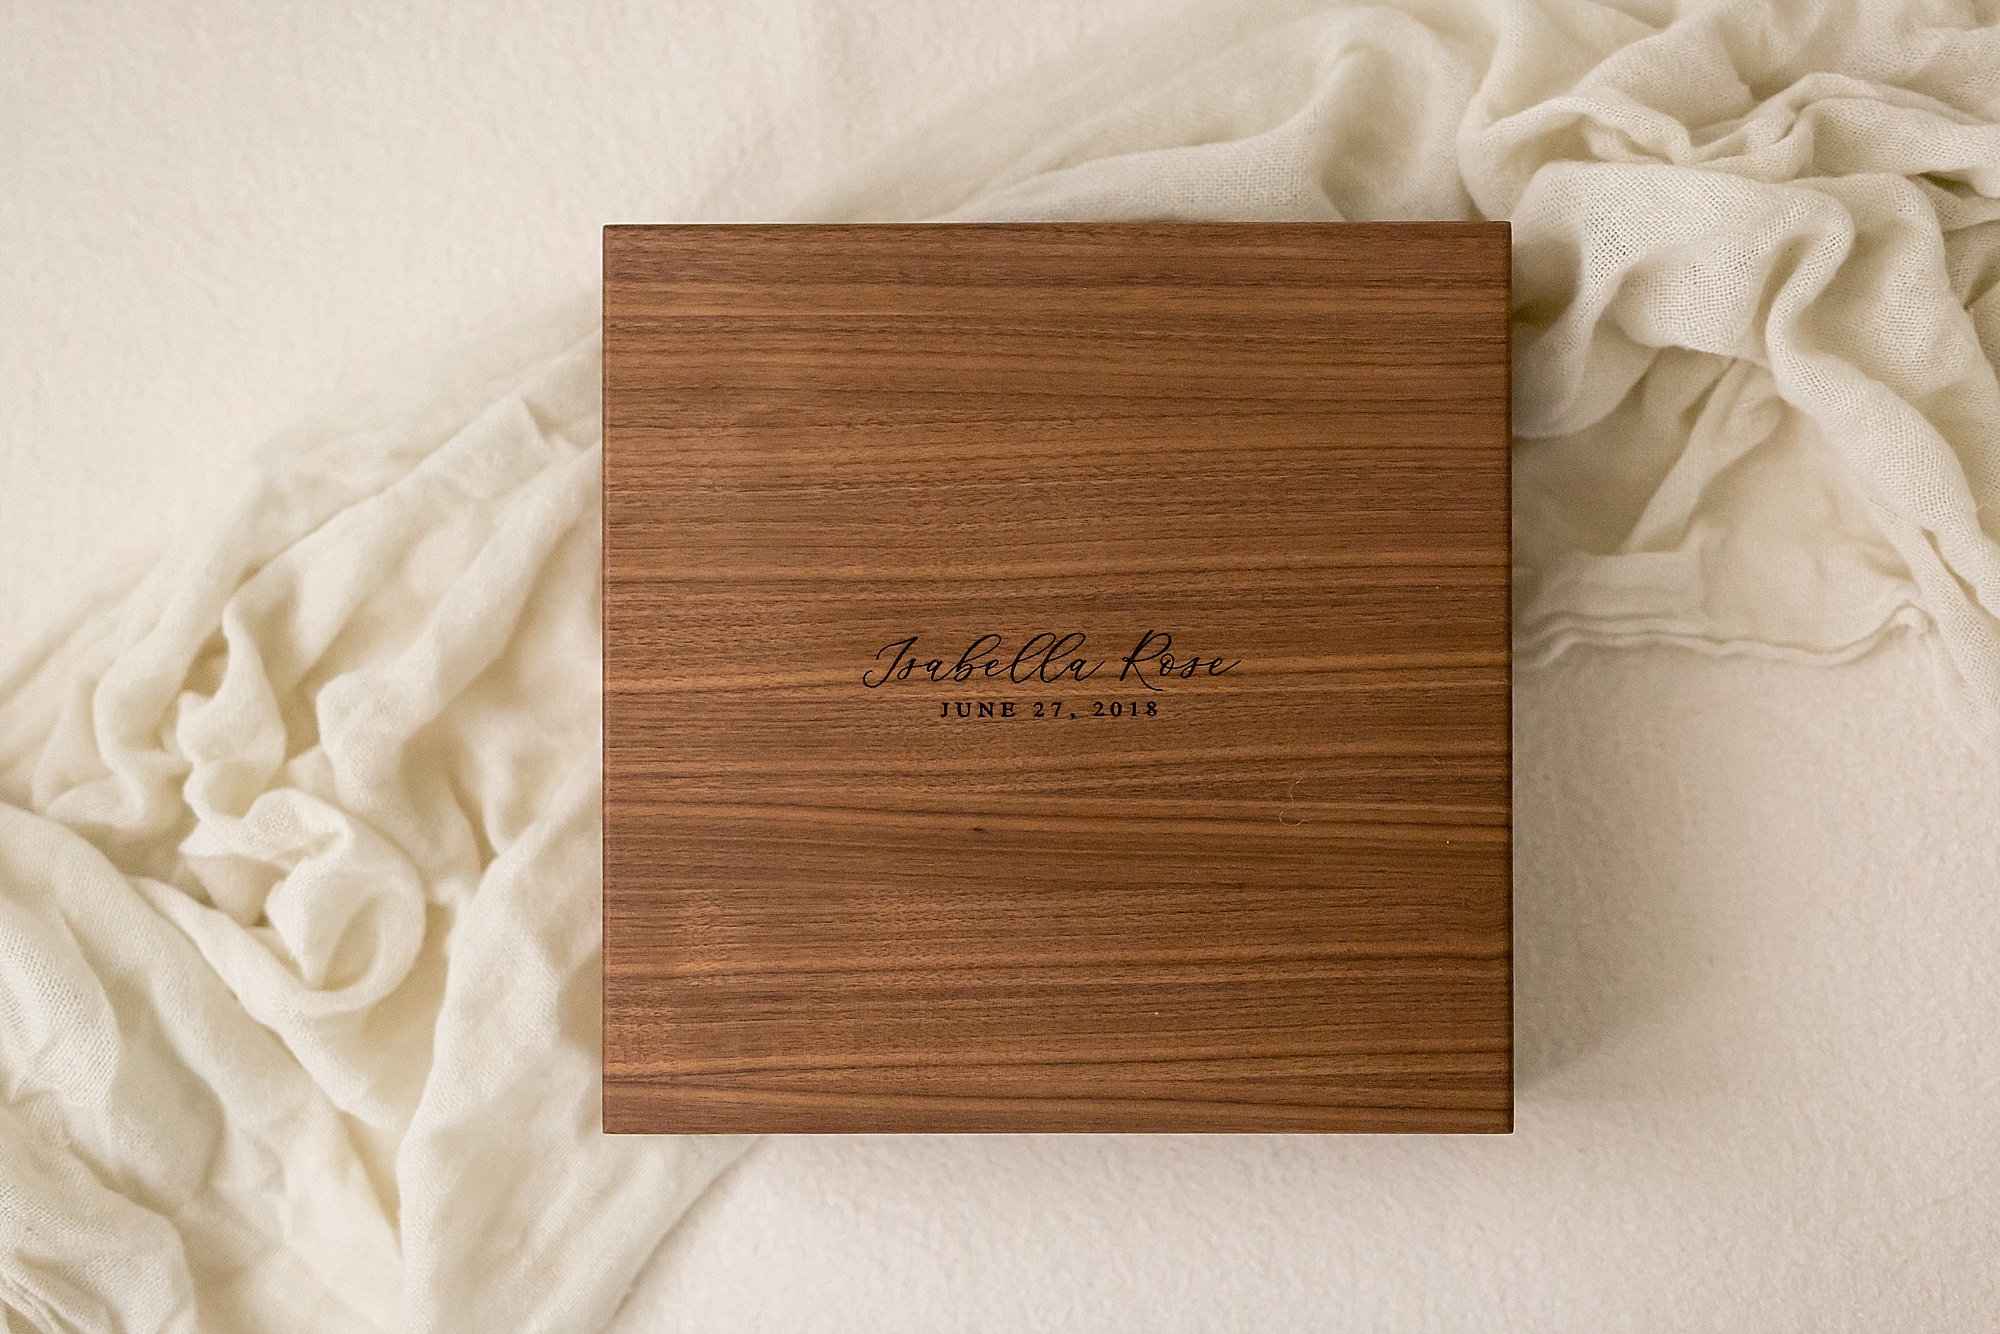 engraved walnut album box